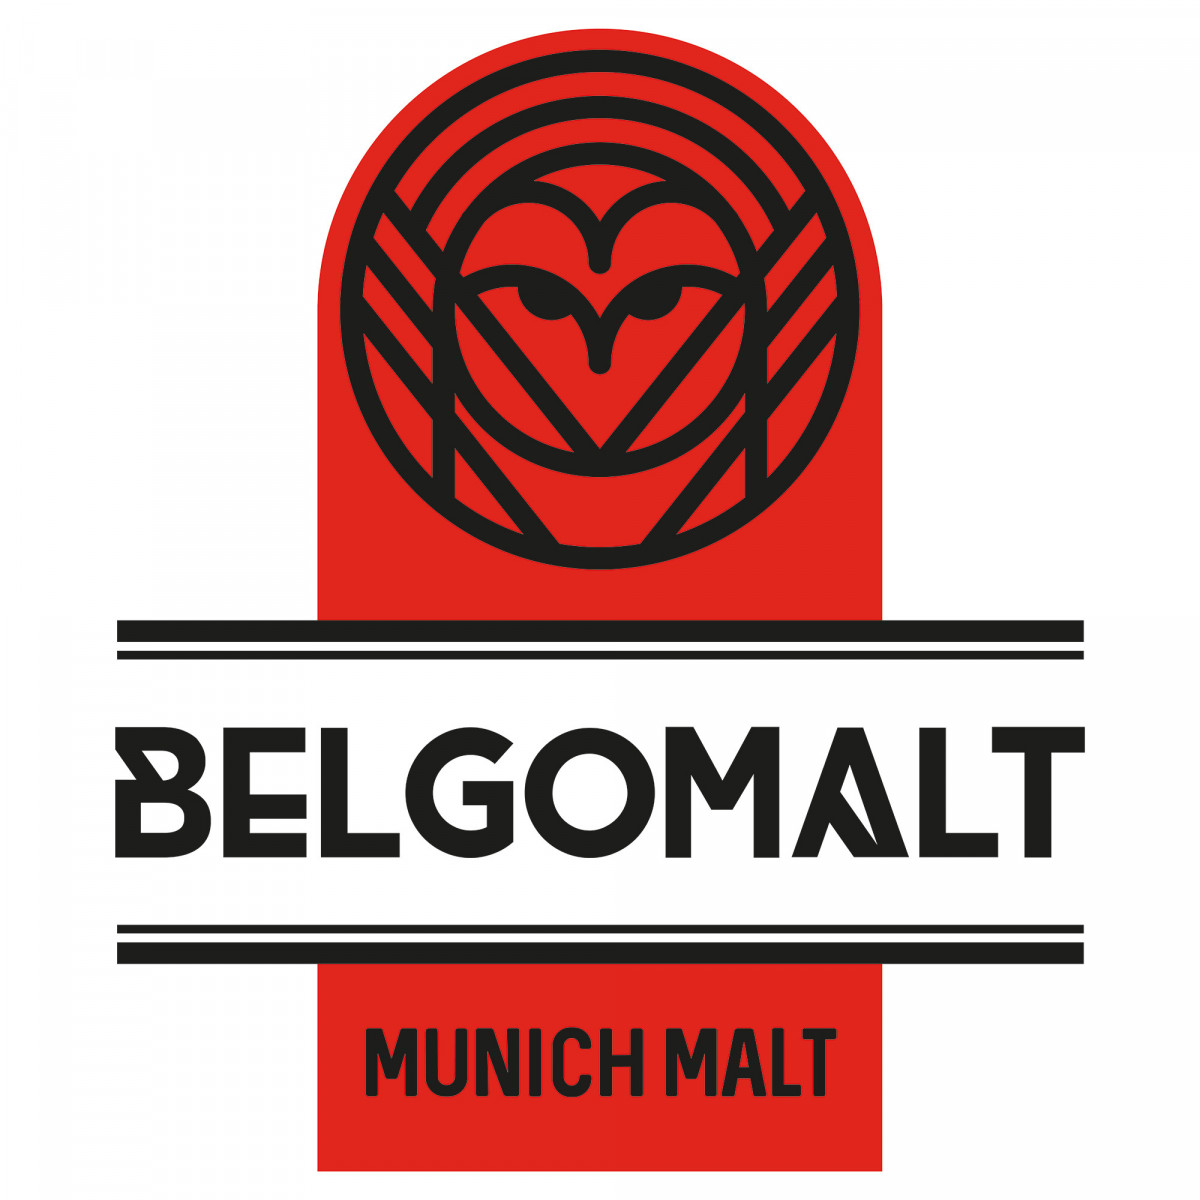 Belgomalt Munich 25 - 35 EBC 1 kg